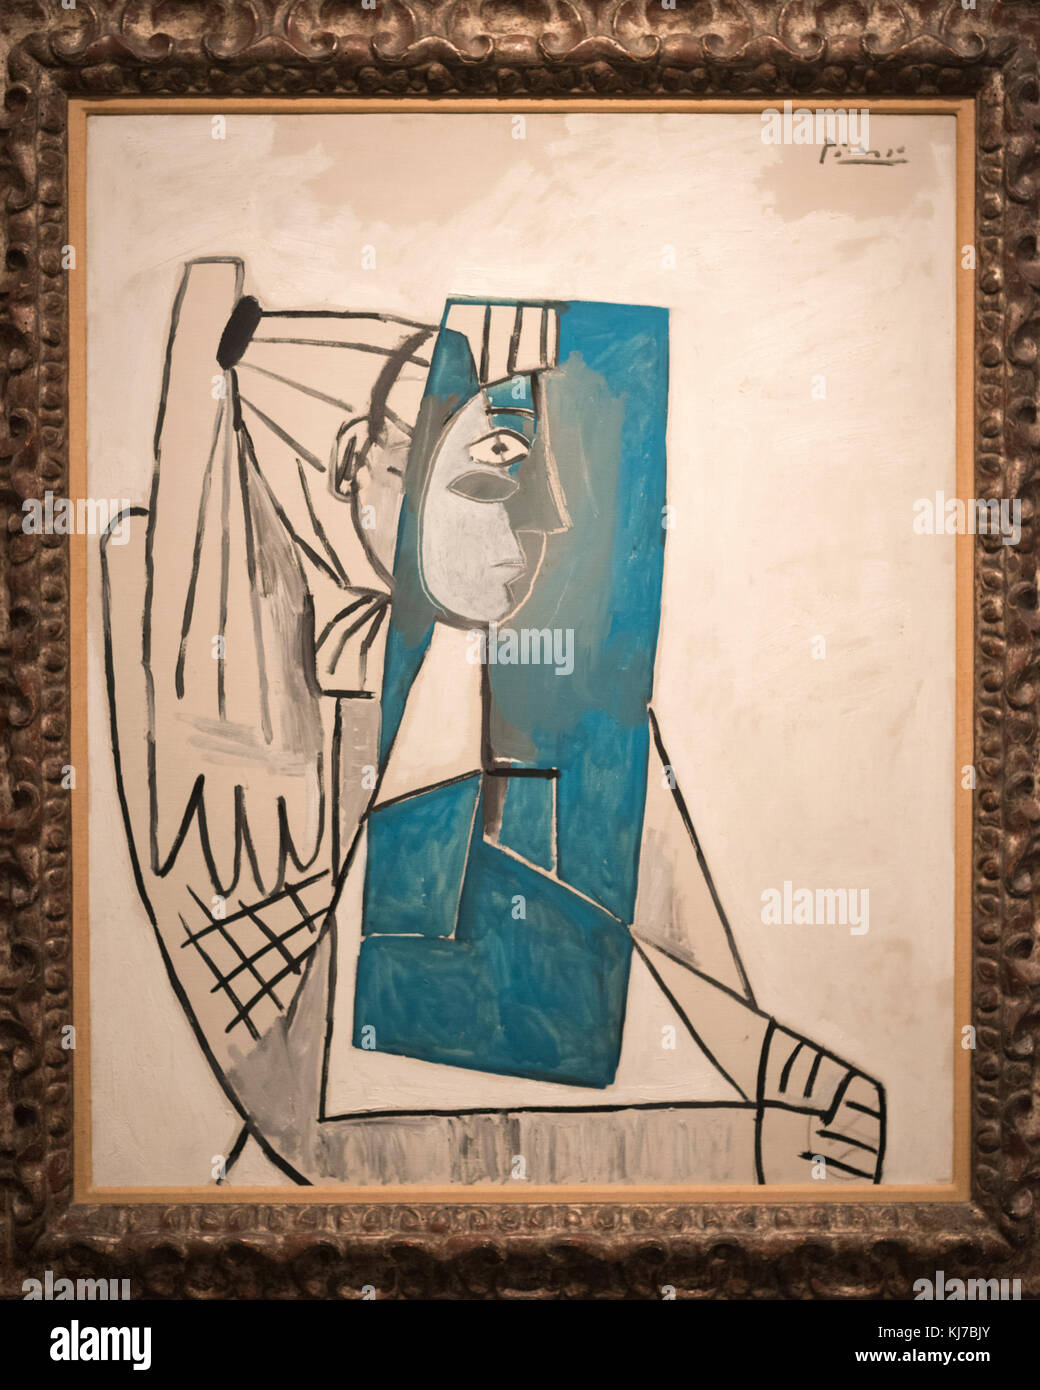 Portrait of Sylvette David by Pablo Picasso, Israel Museum, Jerusalem, Israel Stock Photo